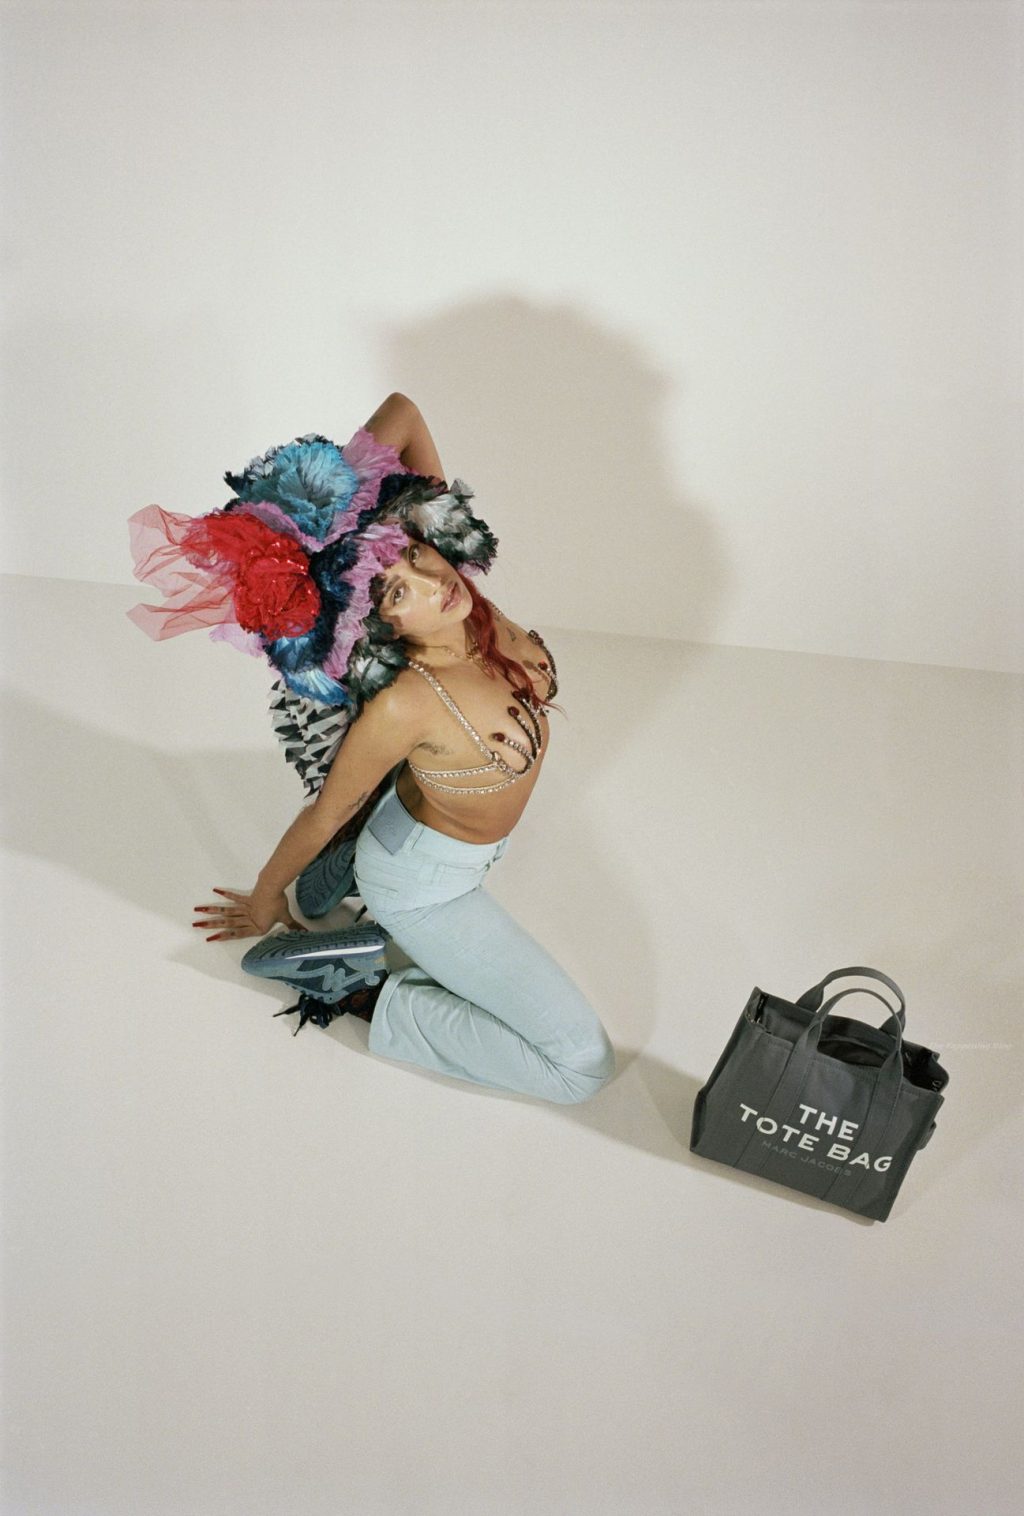 Lourdes Leon Stars in Marc Jacobs Campaign (8 Photos)